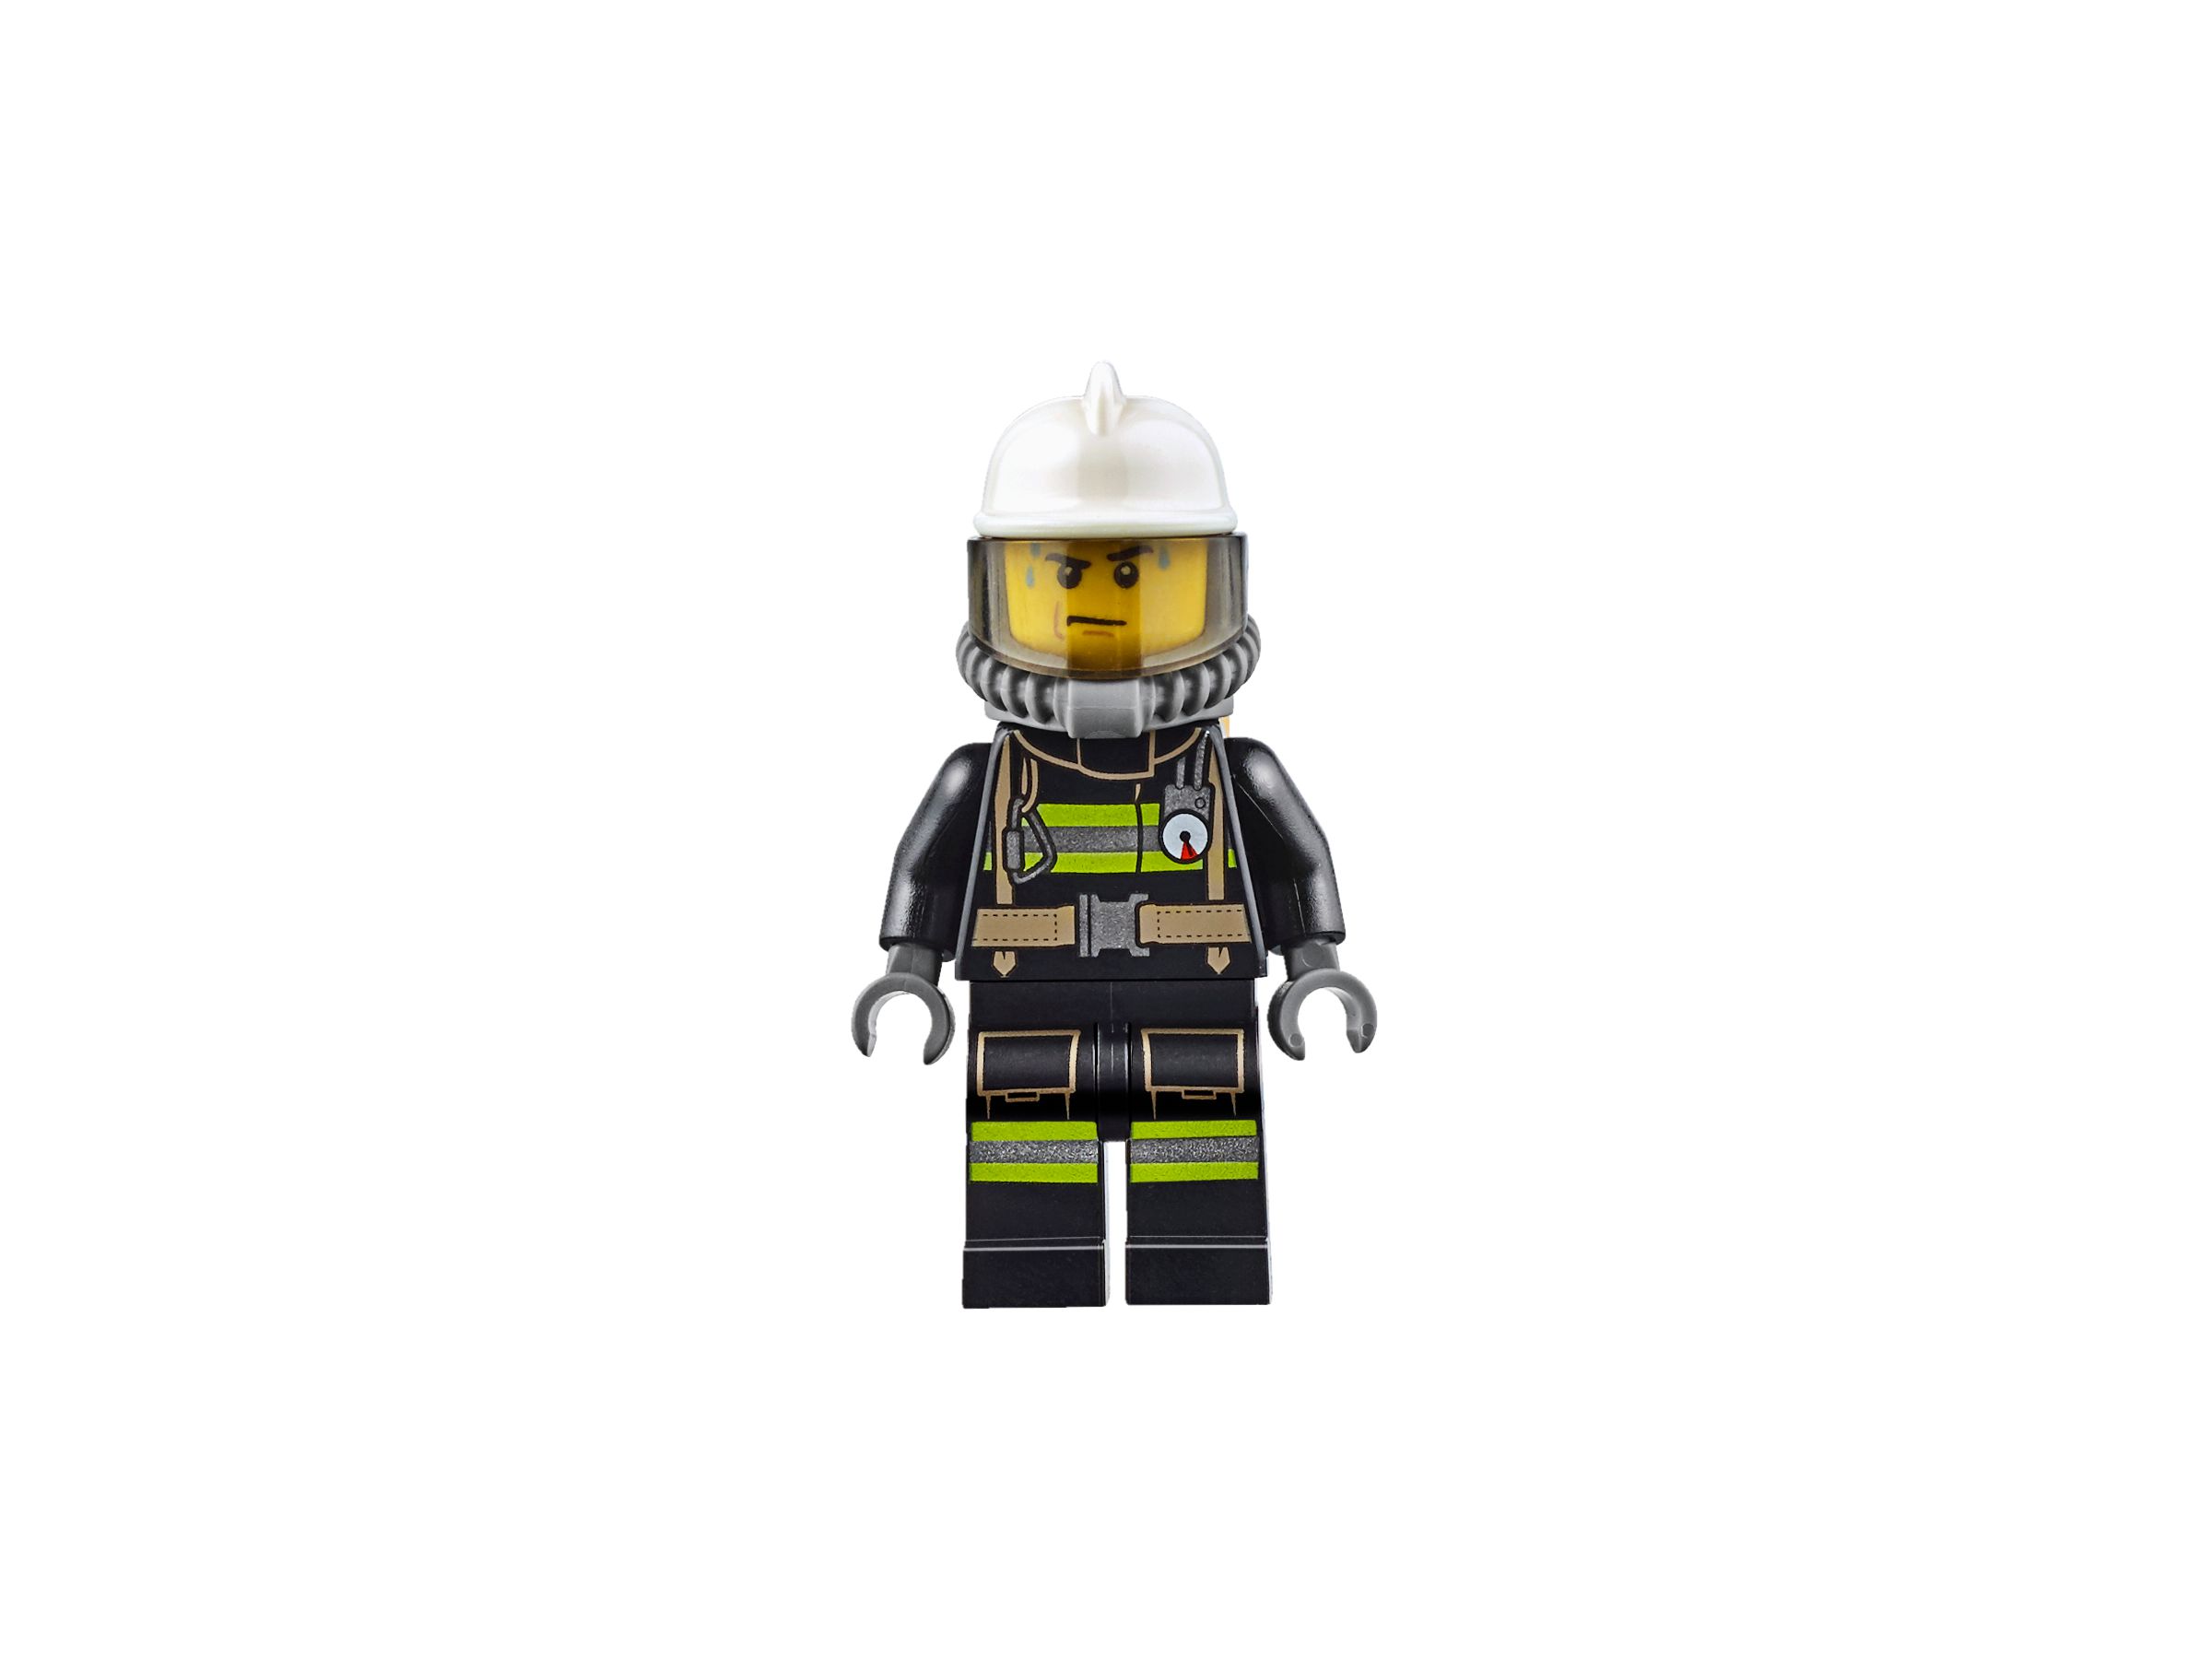 LEGO City 60110 Große Feuerwehrstation LEGO_60110_alt16.jpg